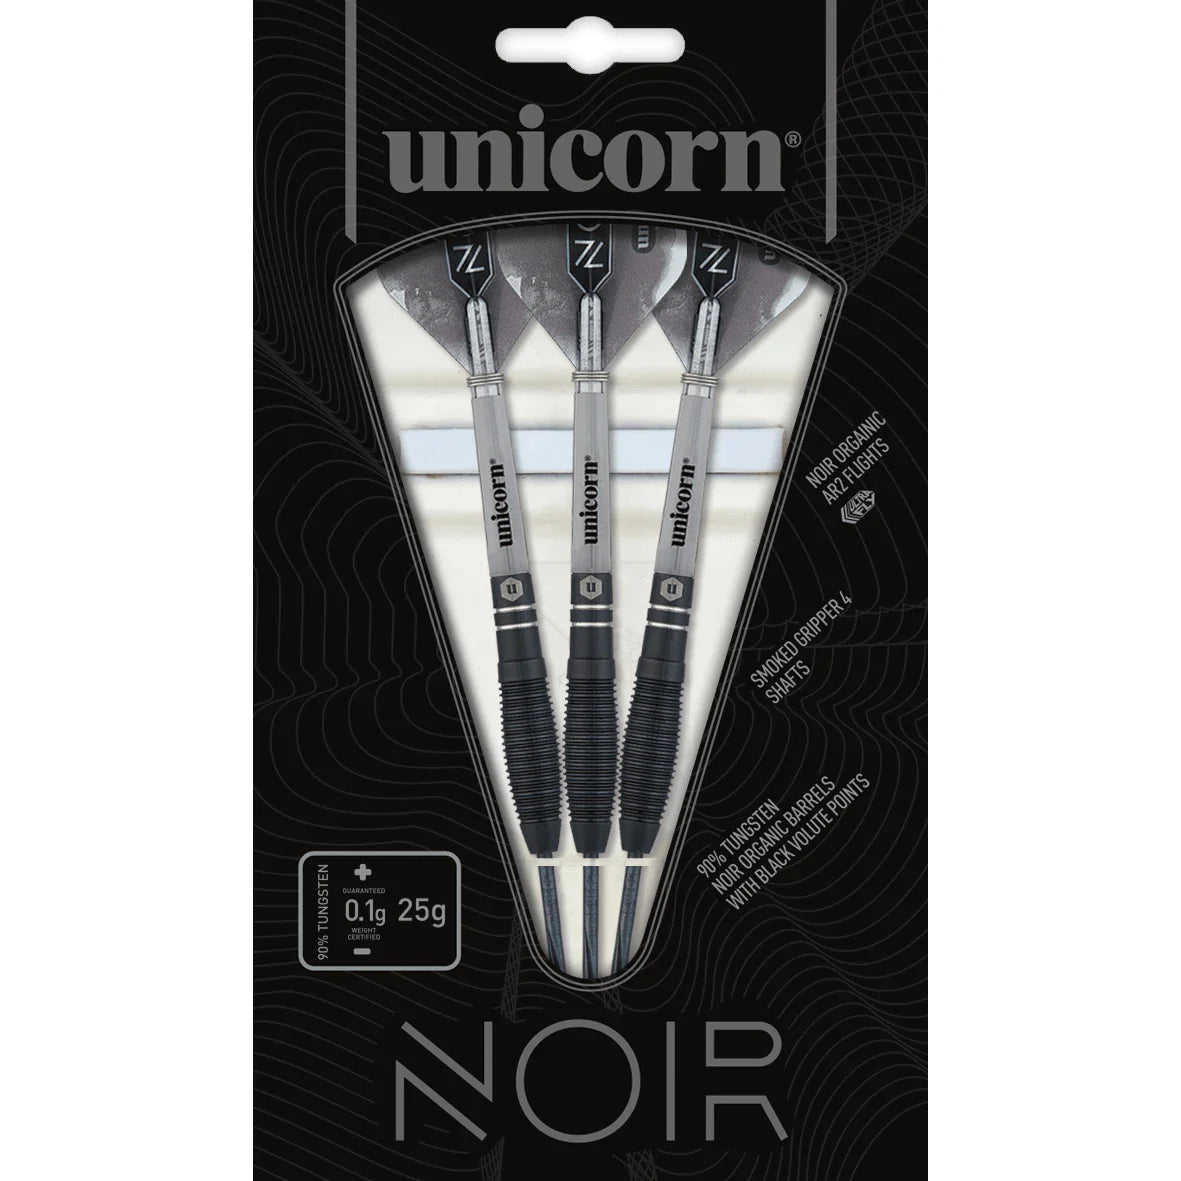 Unicorn Noir Style 1 23g Darts